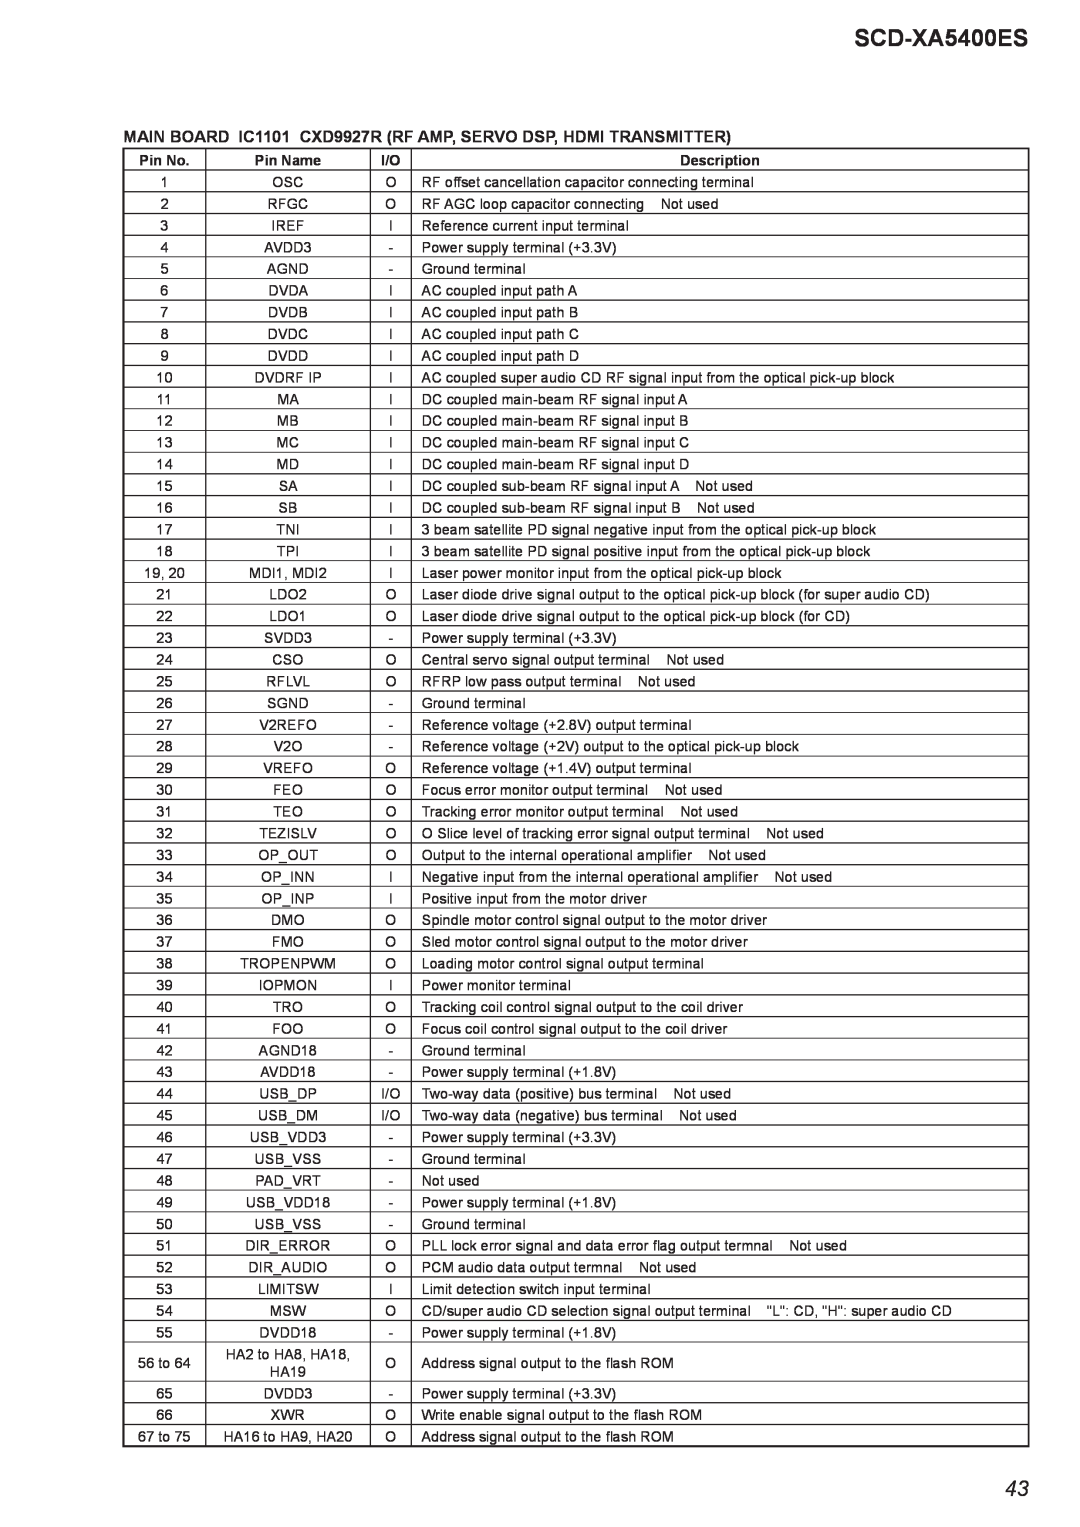 Sony 2008H05-1 service manual SCD-XA5400ES, Pin No, Pin Name, Description, Rfgc 